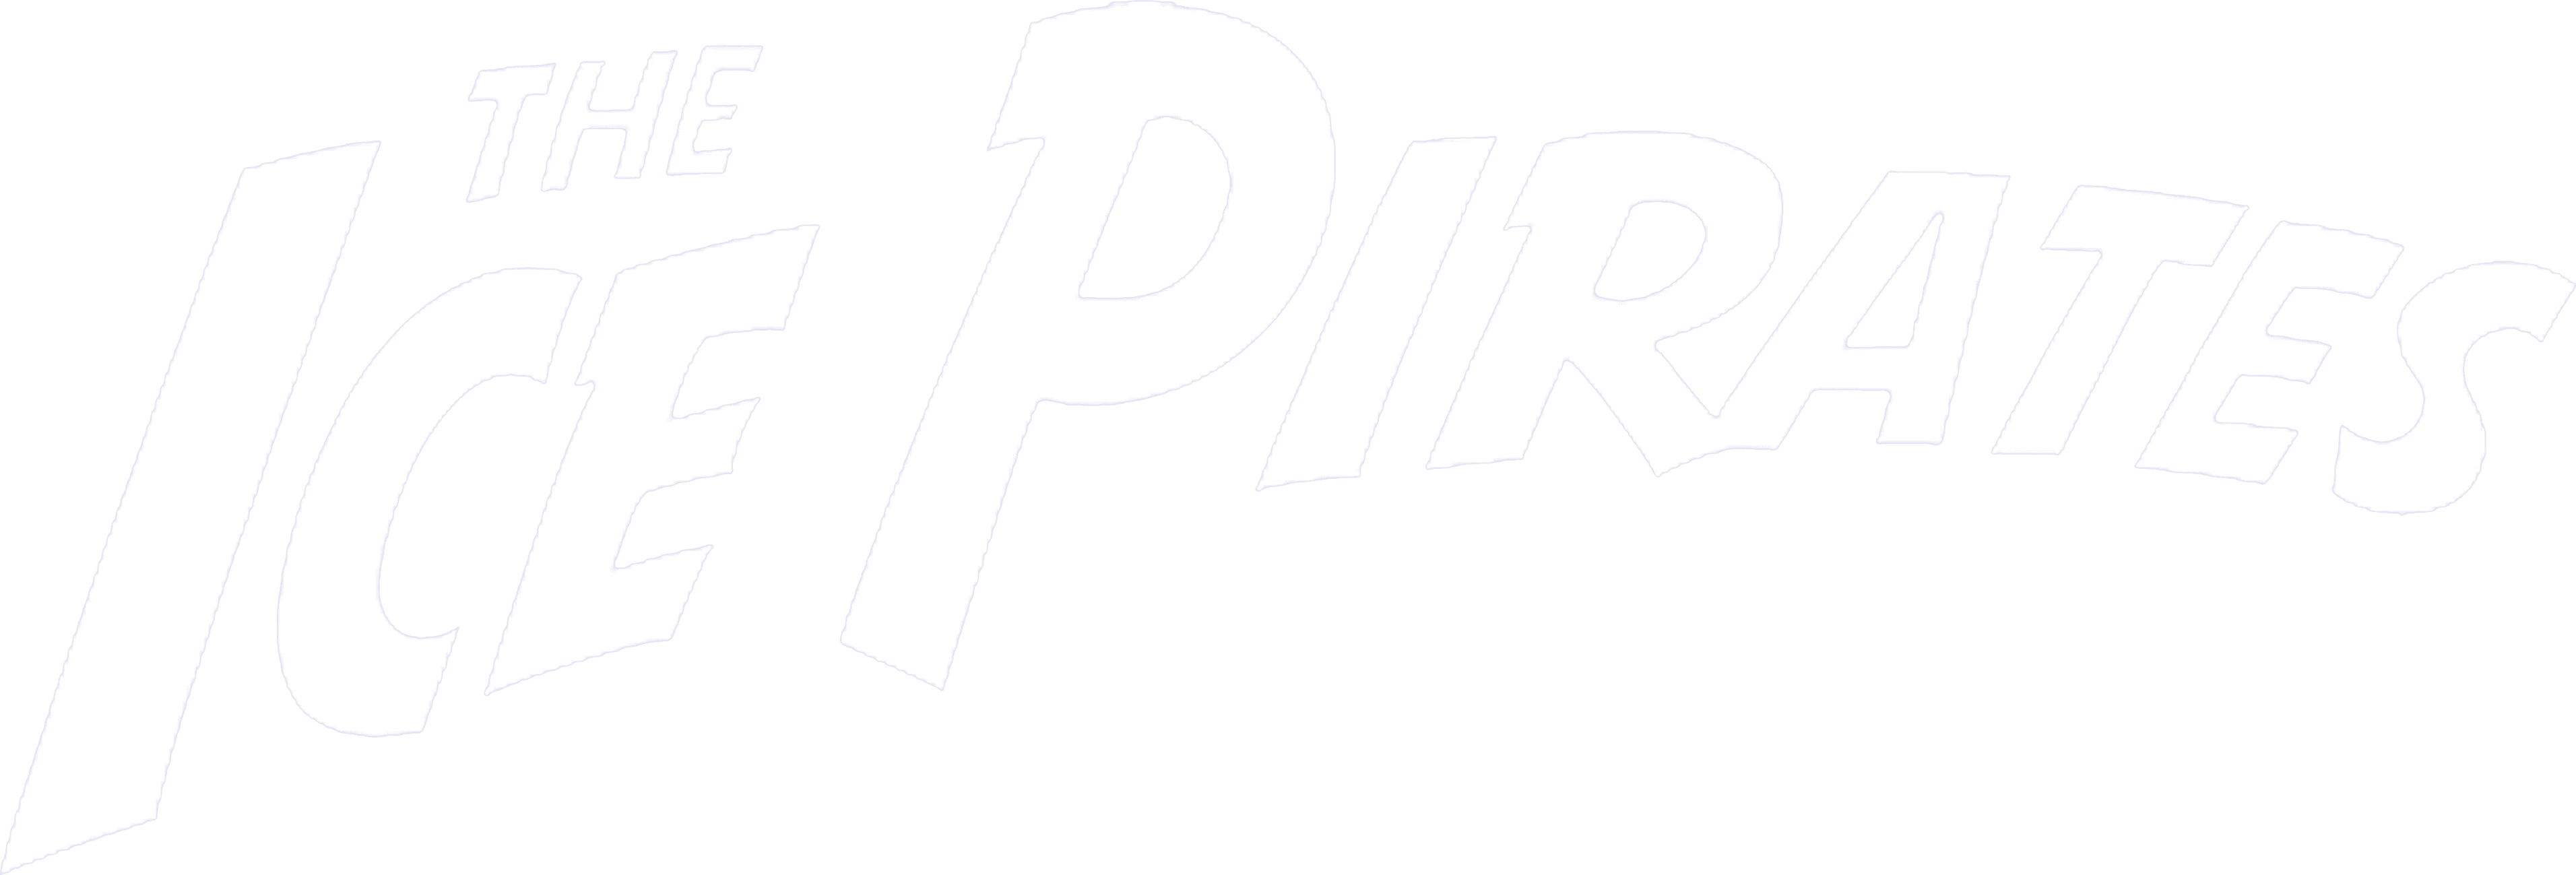 The Ice Pirates logo